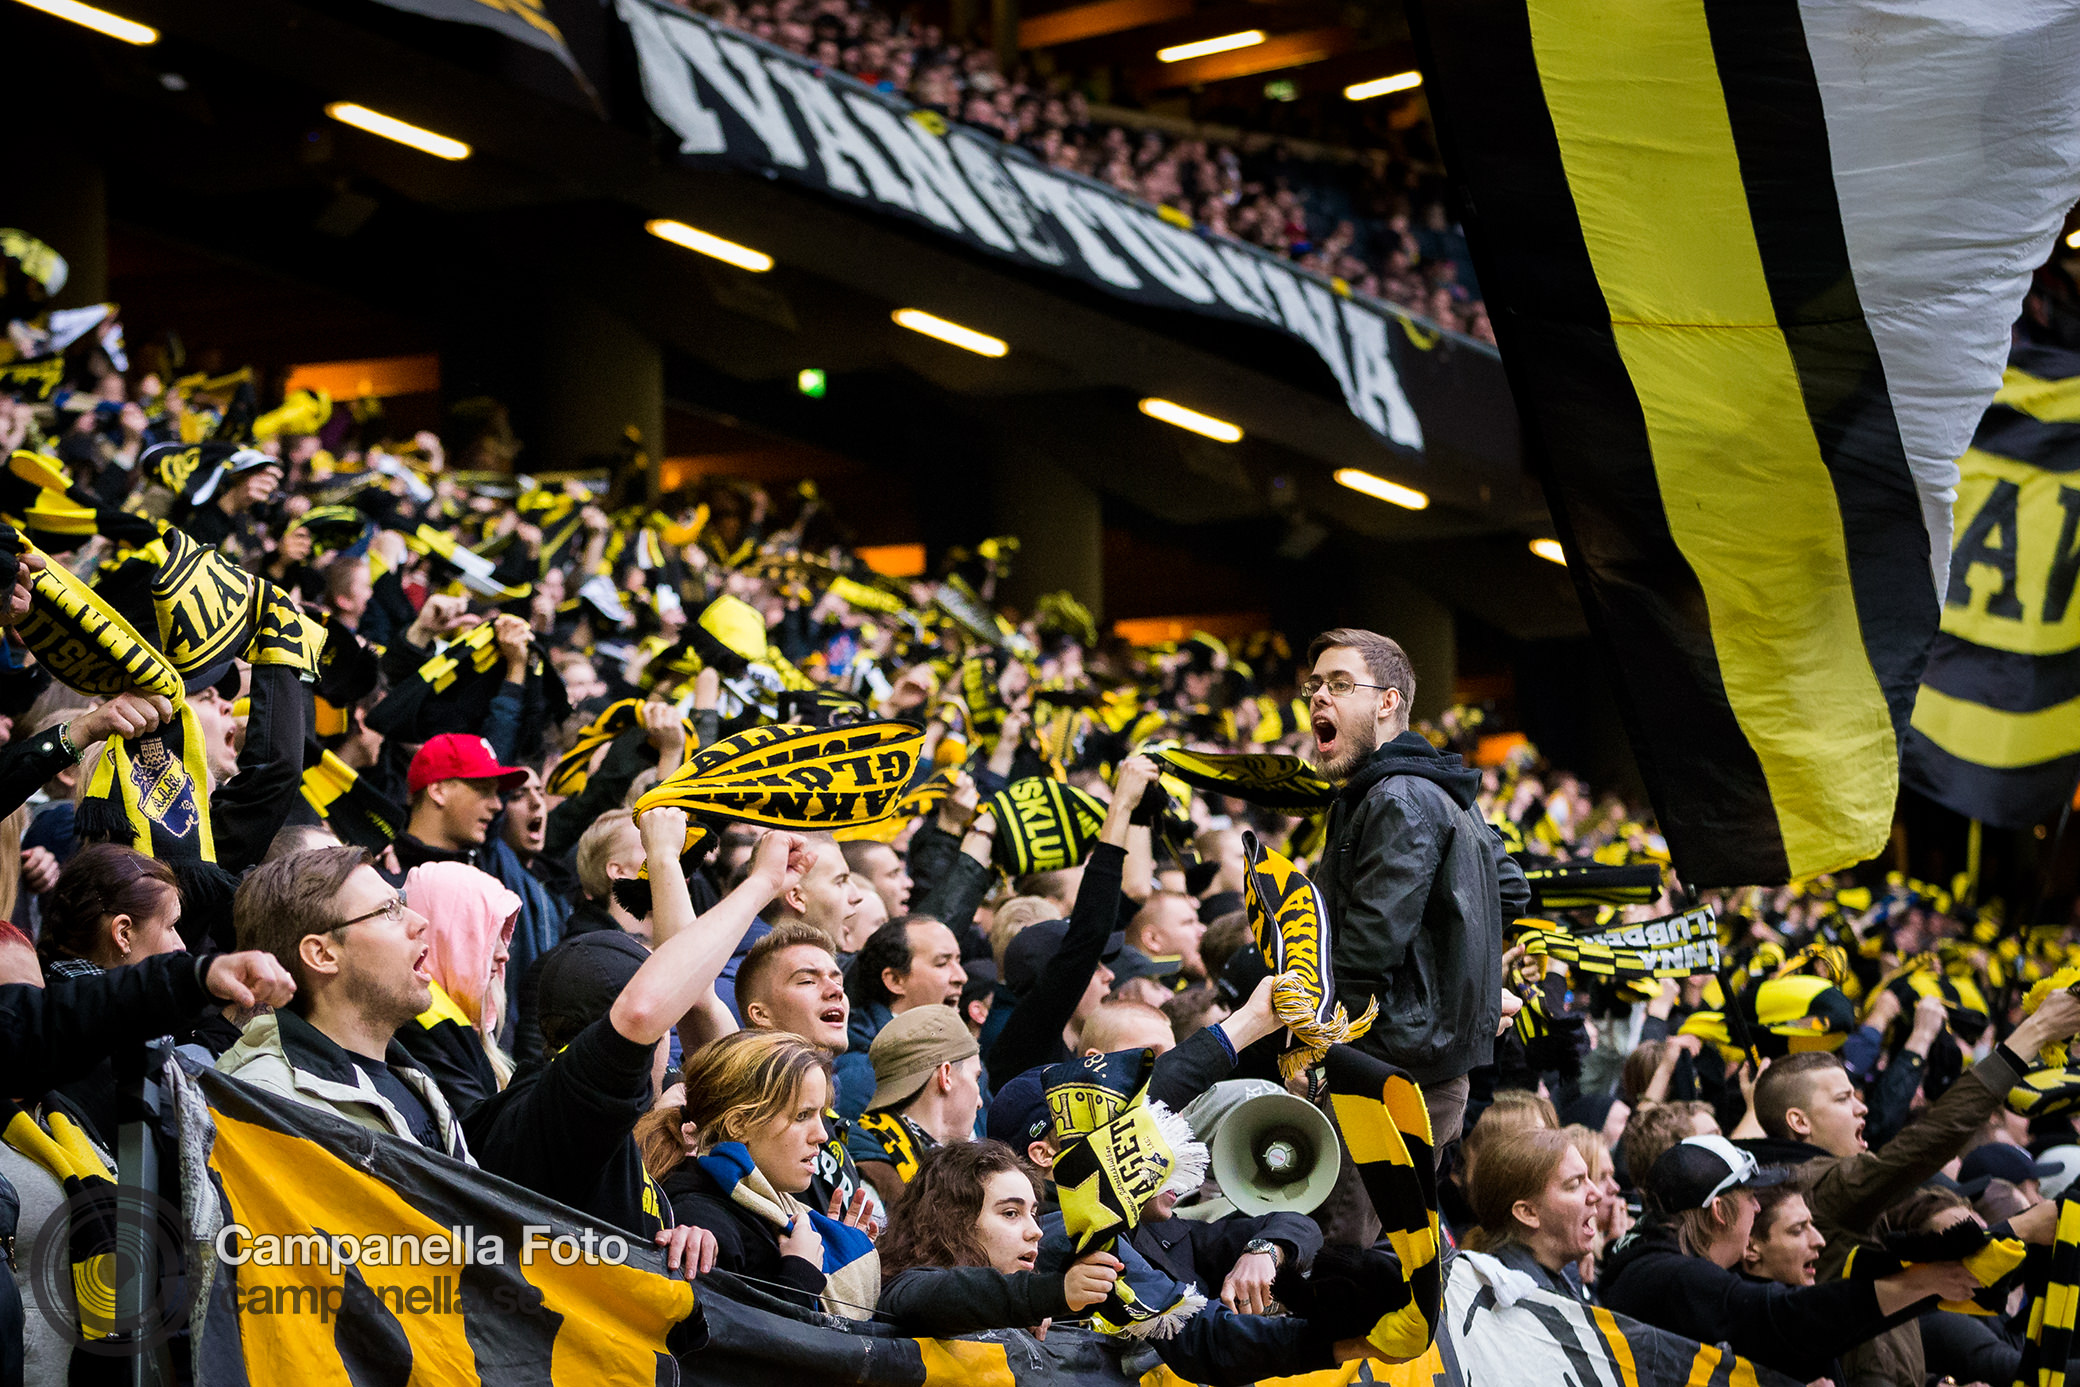 AIK draws home premiere - Michael Campanella Photography